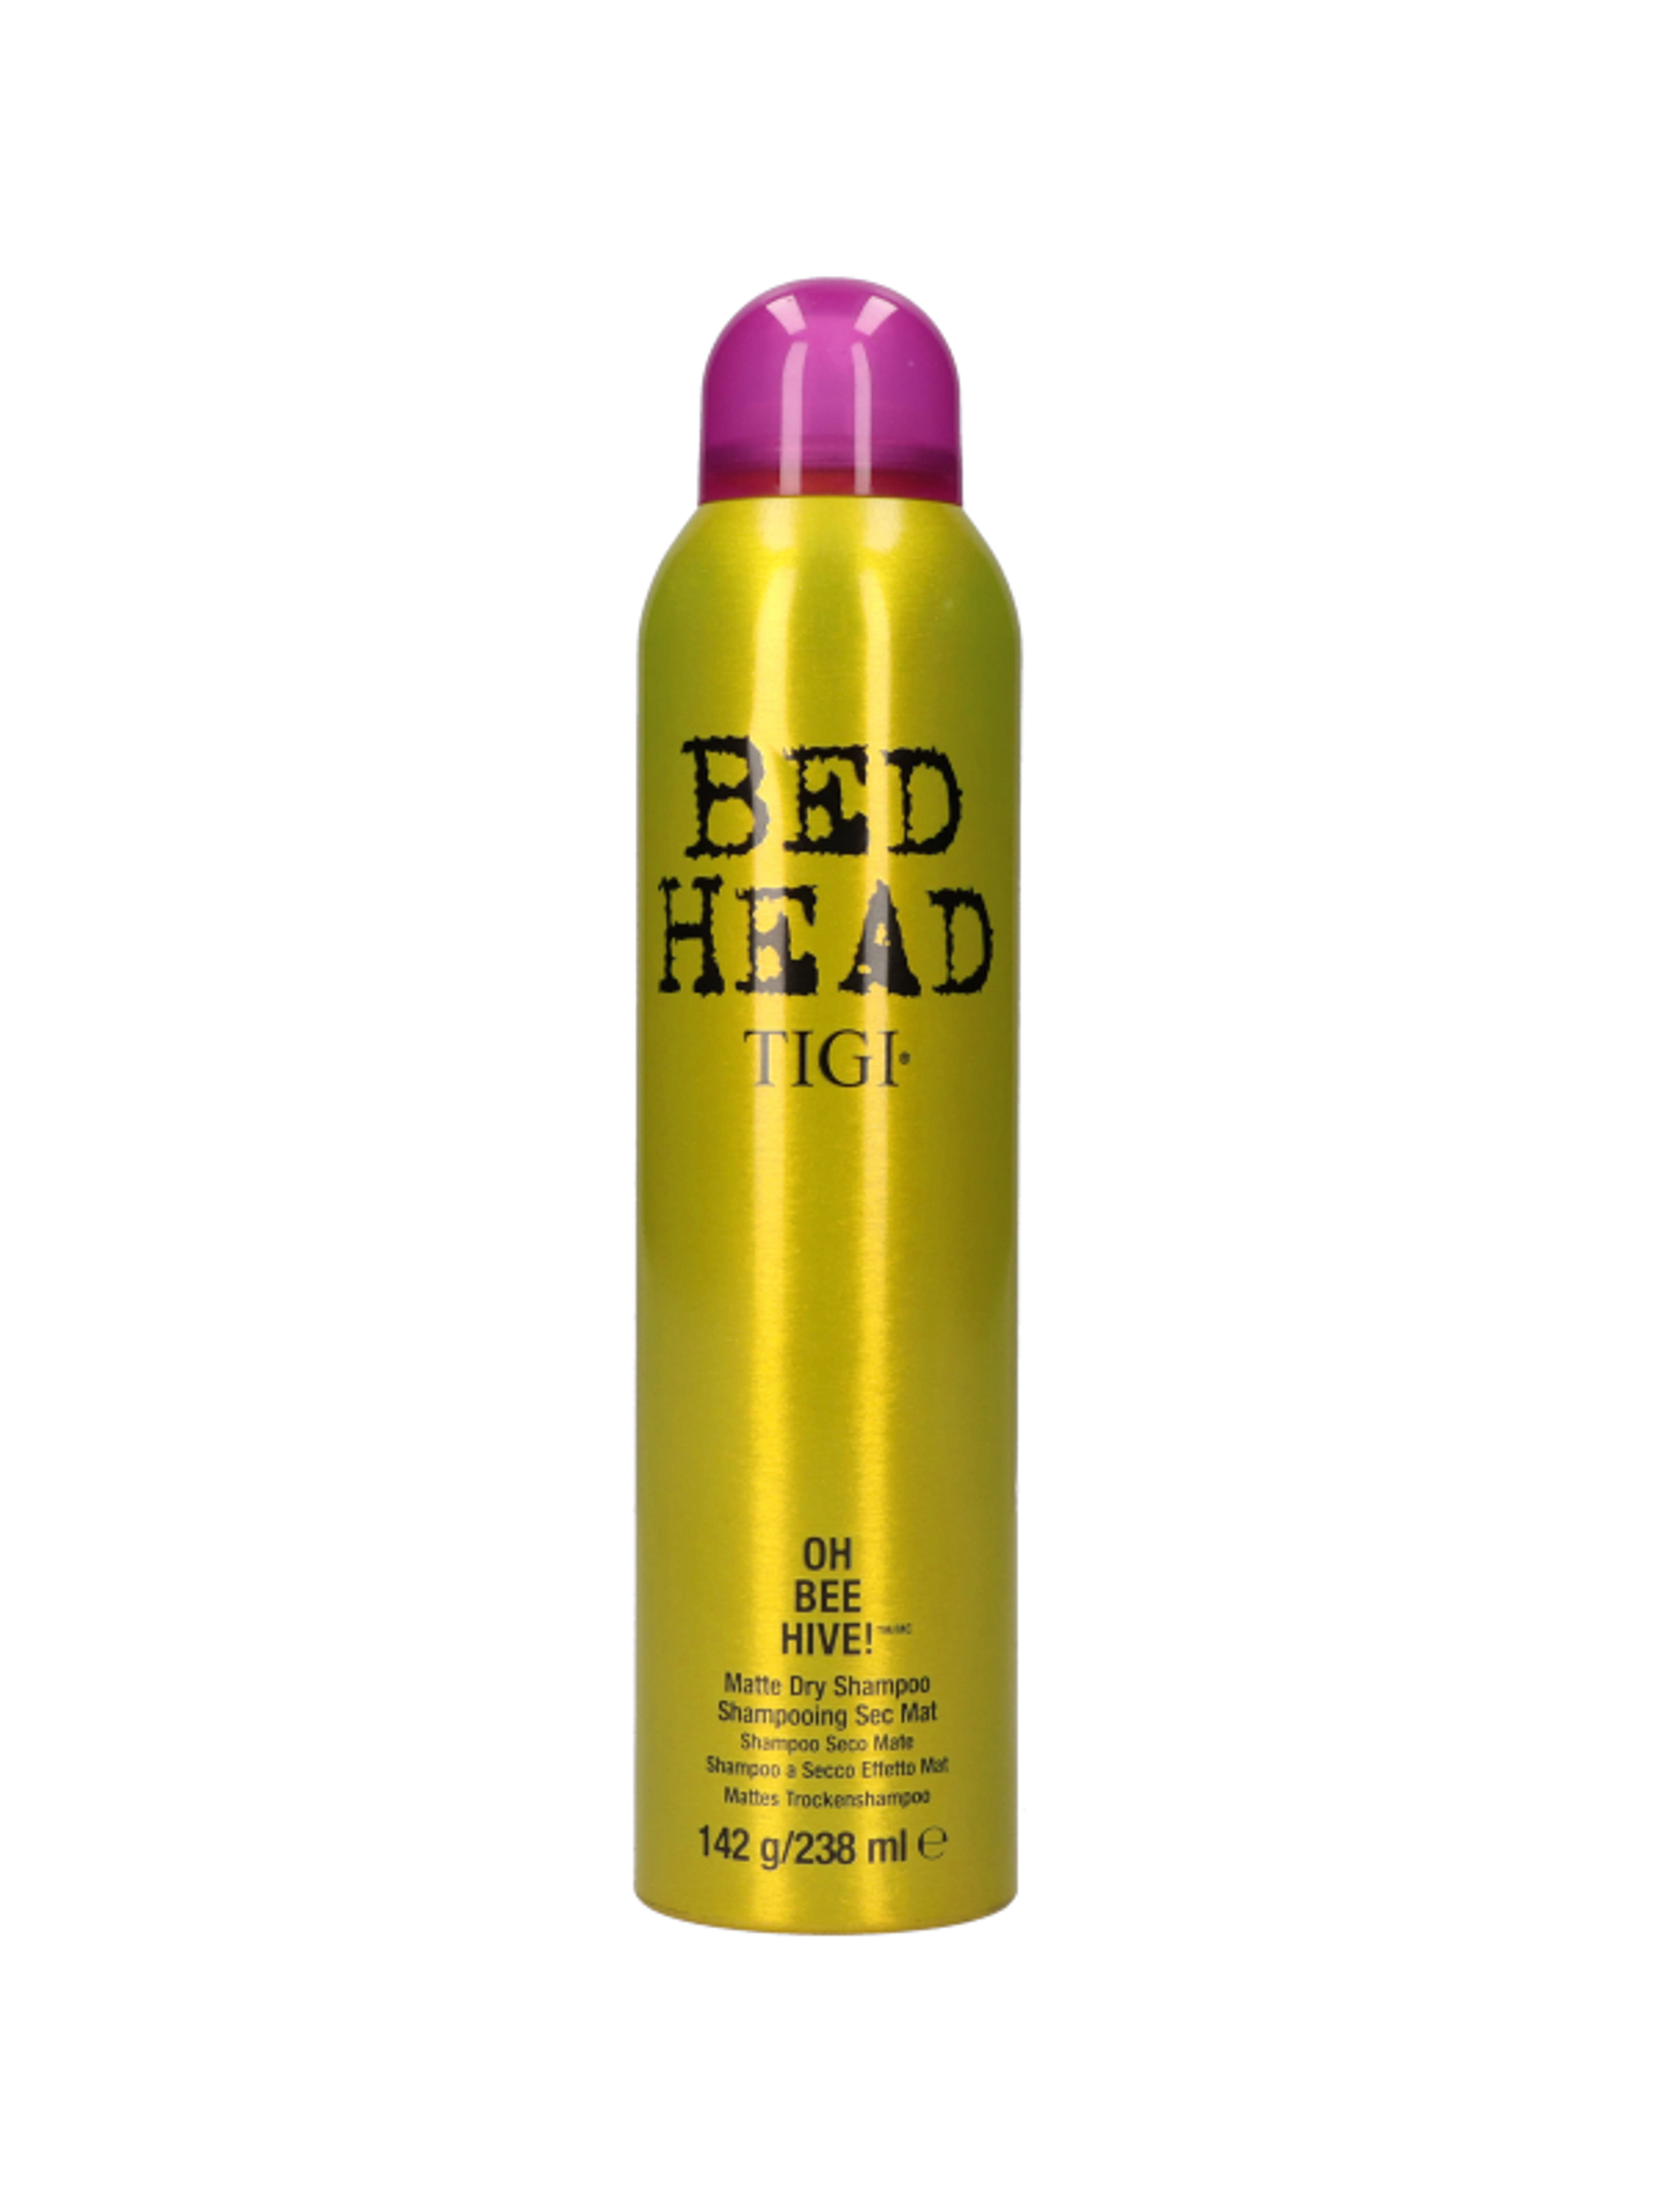 Tigi Bed Head Matt szárazsampon - 238 ml